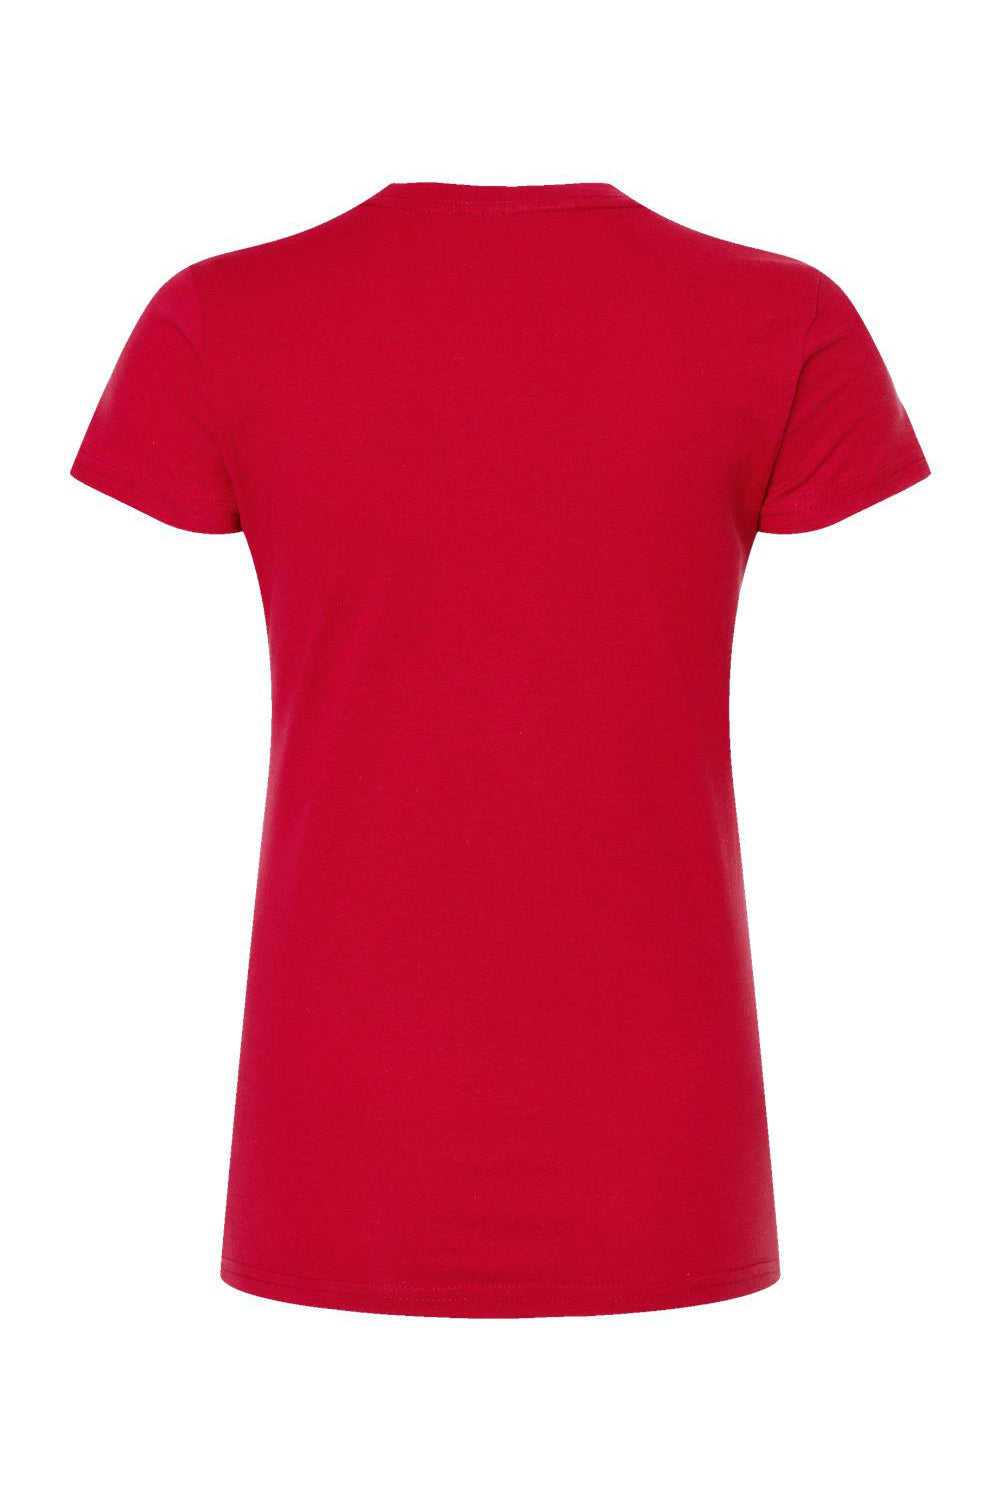 Tultex 213 Womens Fine Jersey Slim Fit Short Sleeve Crewneck T-Shirt Red Flat Back